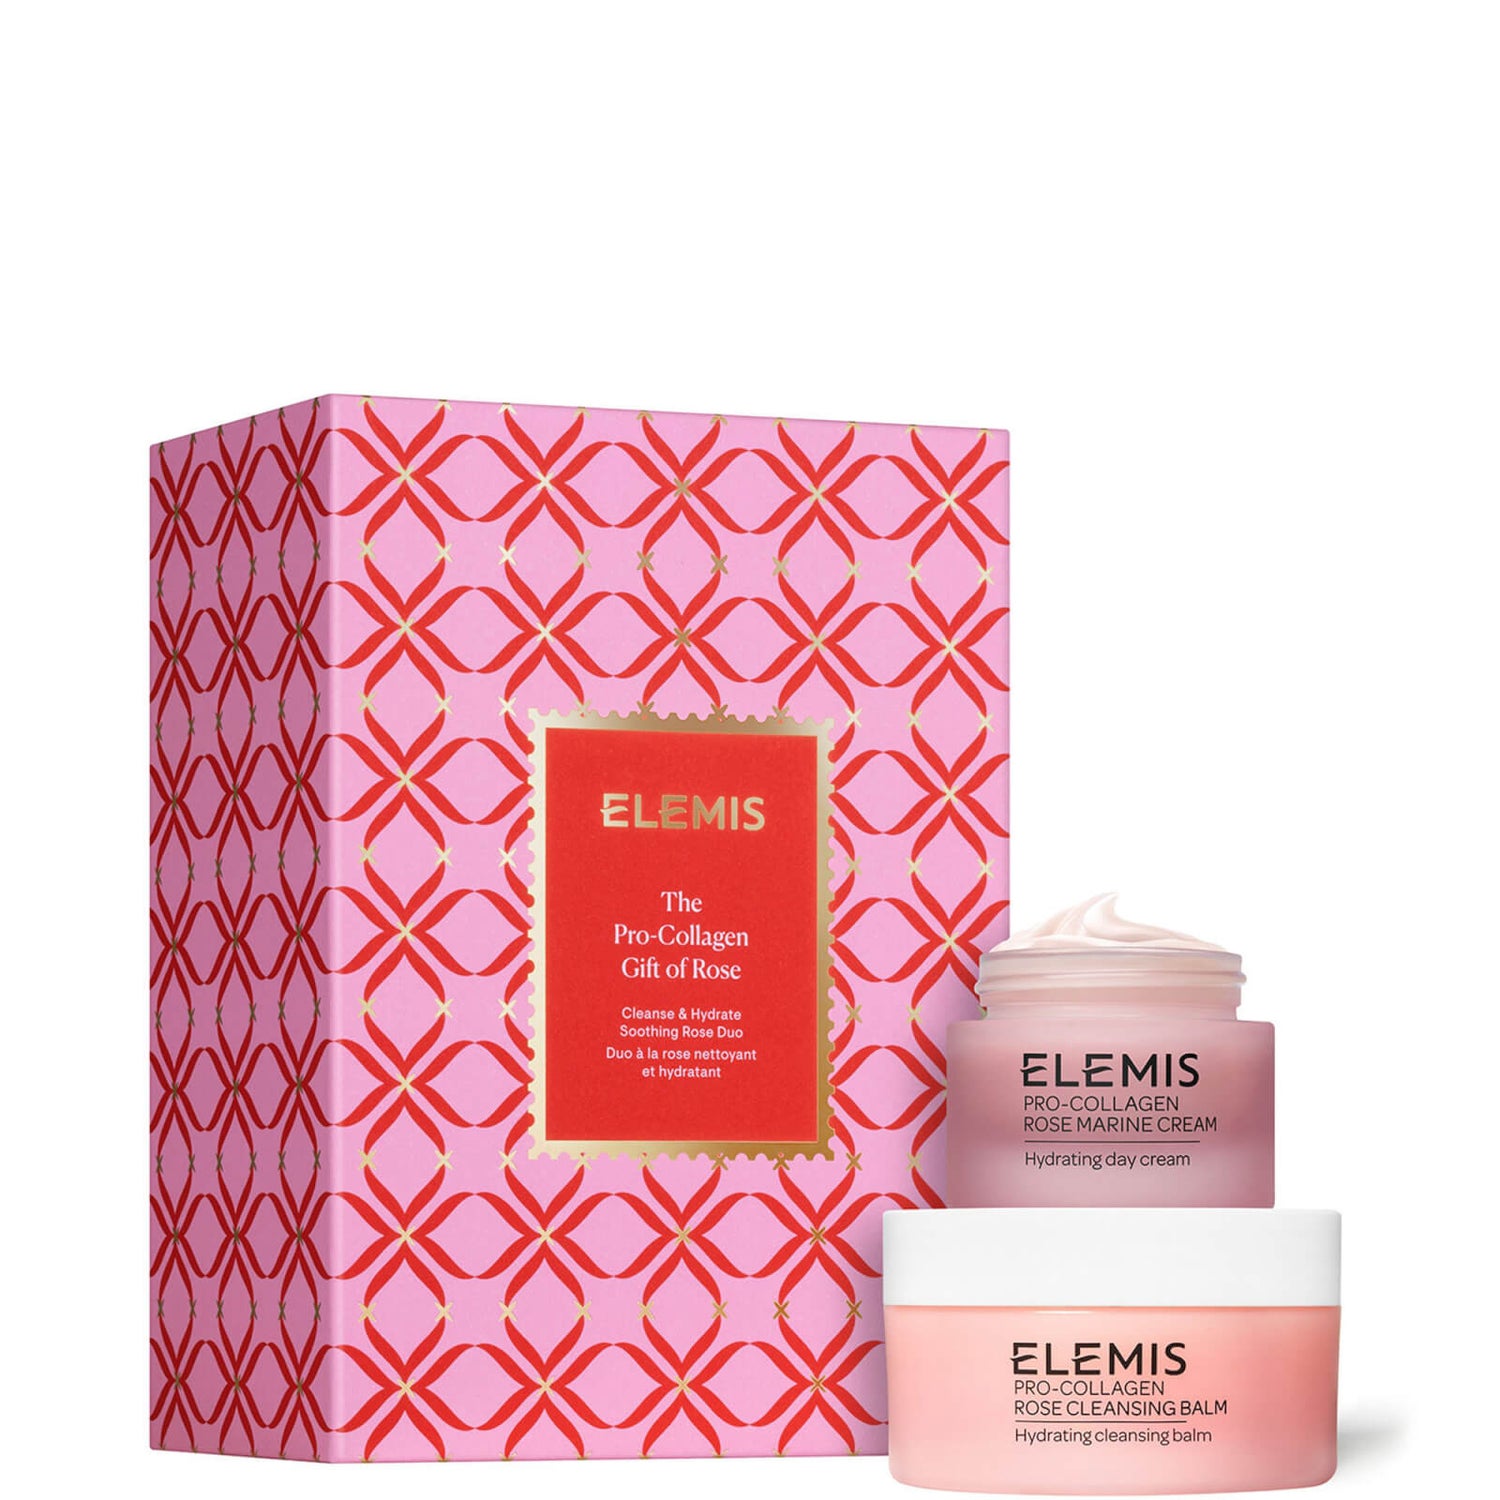 Elemis The Pro-Collagen Gift of Rose APAC